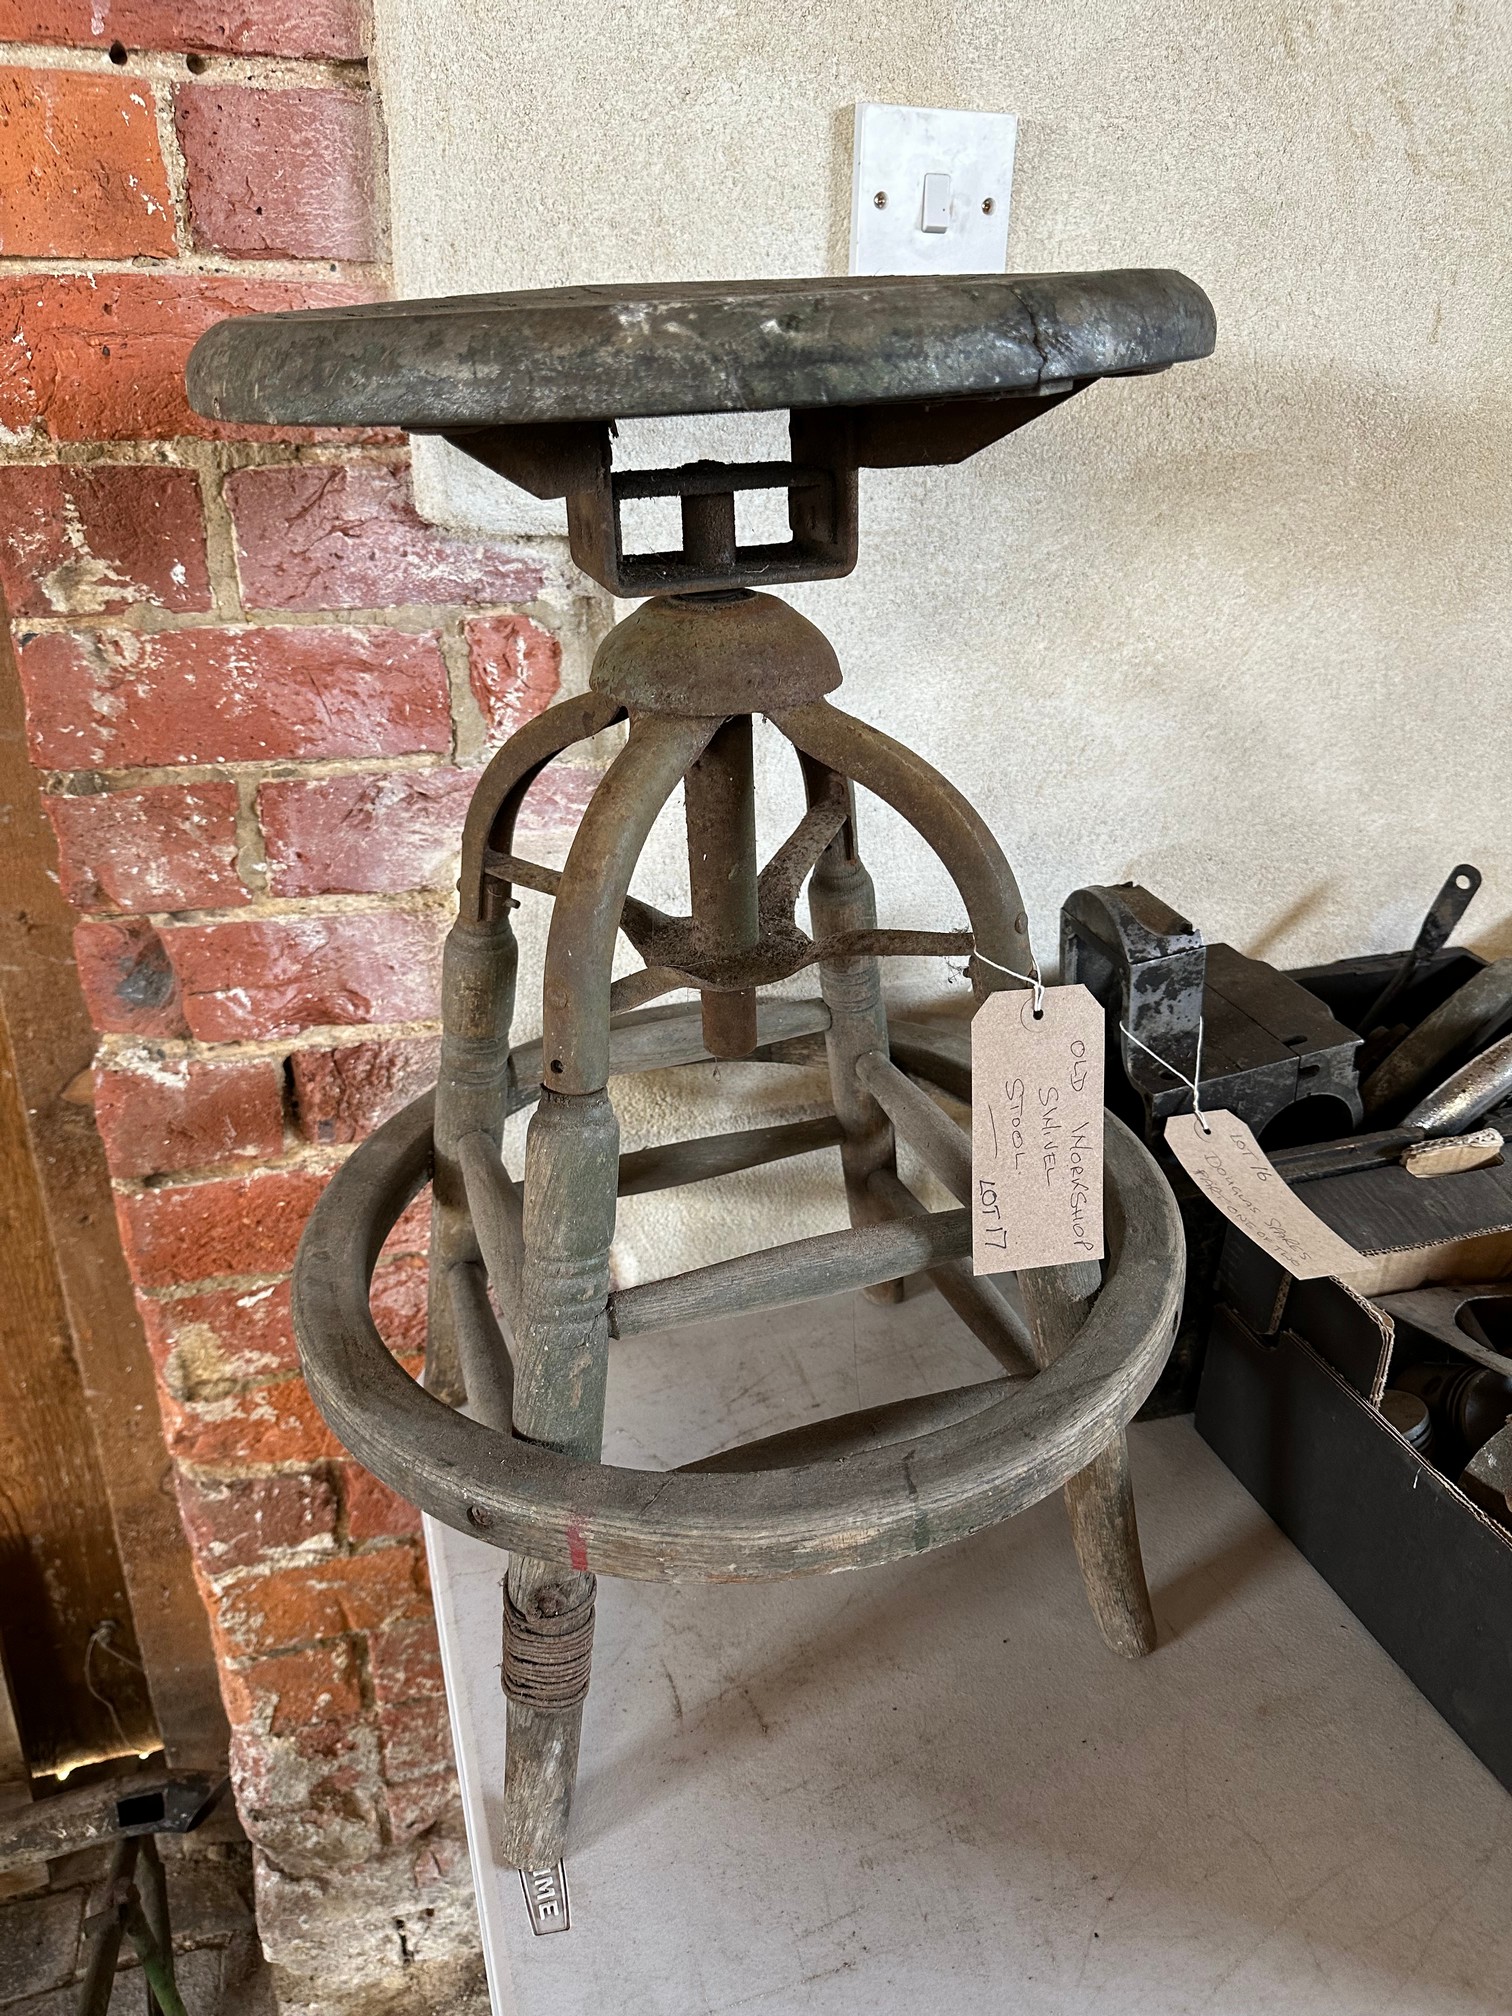 Henry Body's wooden workshop swivel stool. - Image 2 of 2